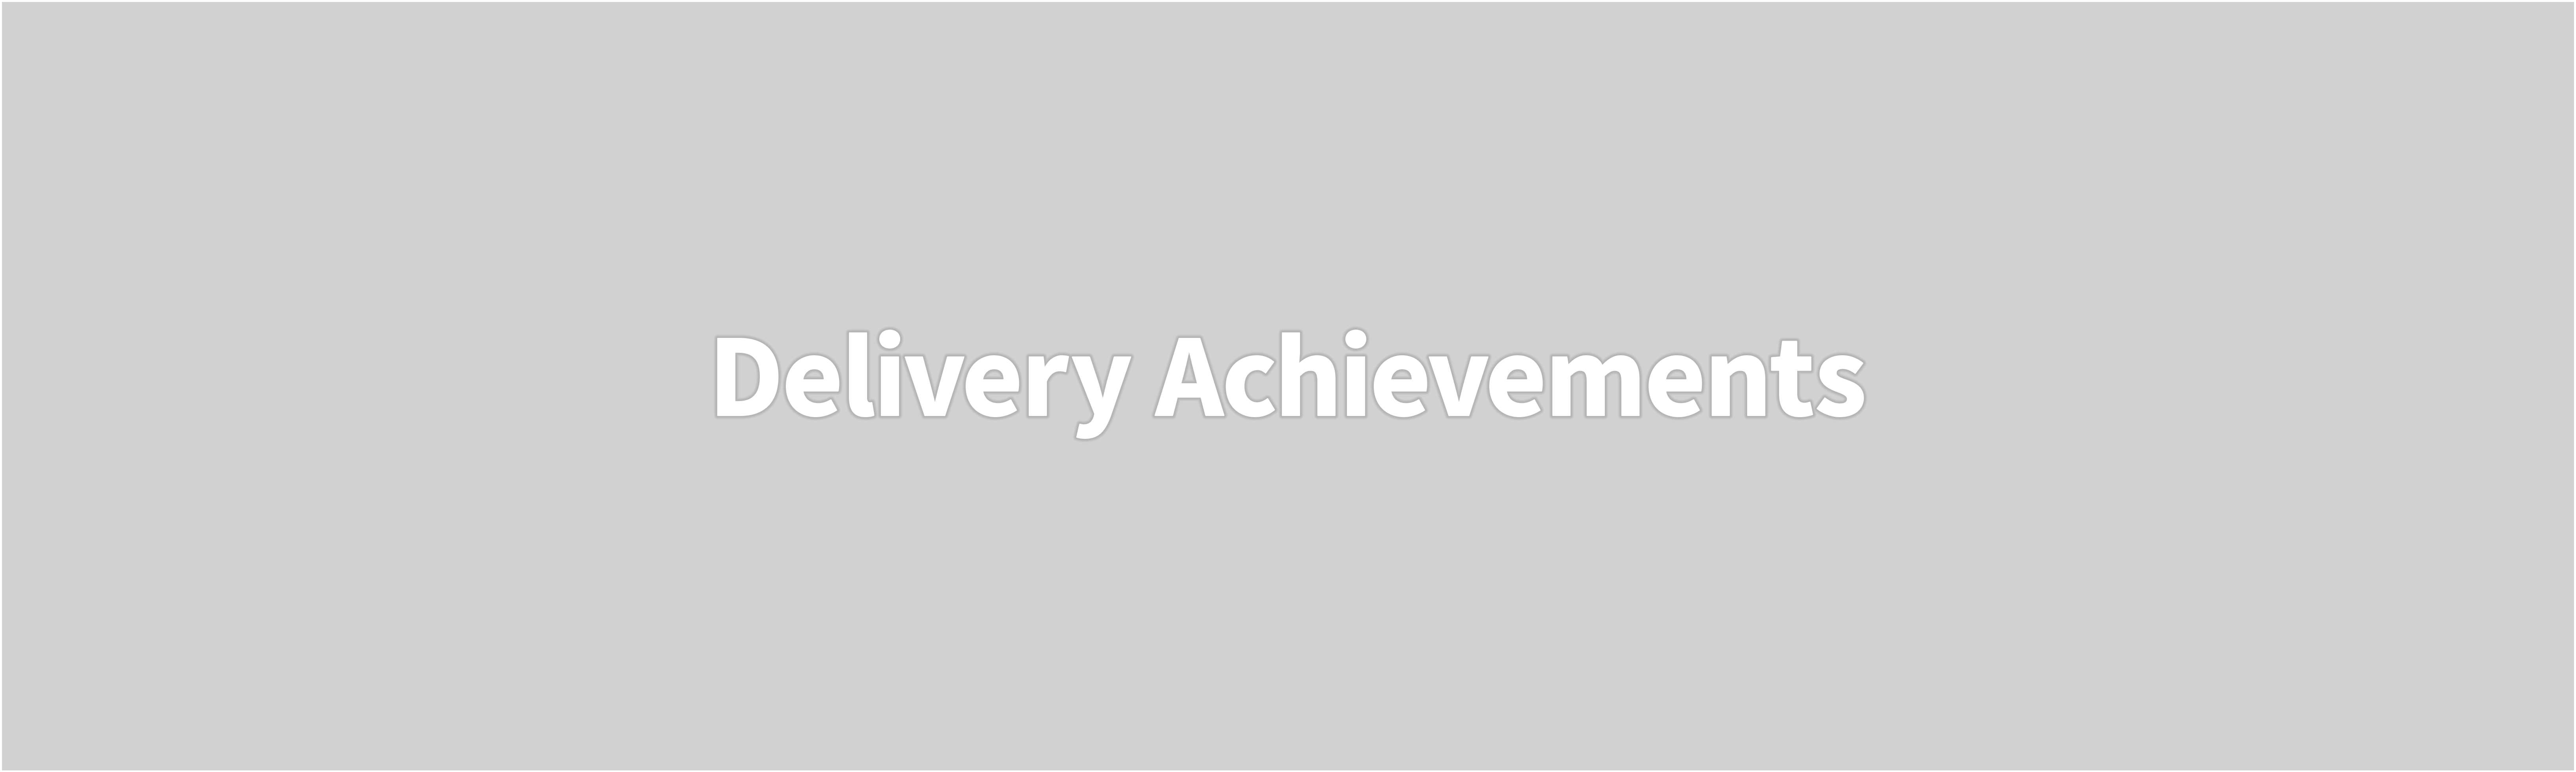 Delivery Achievements